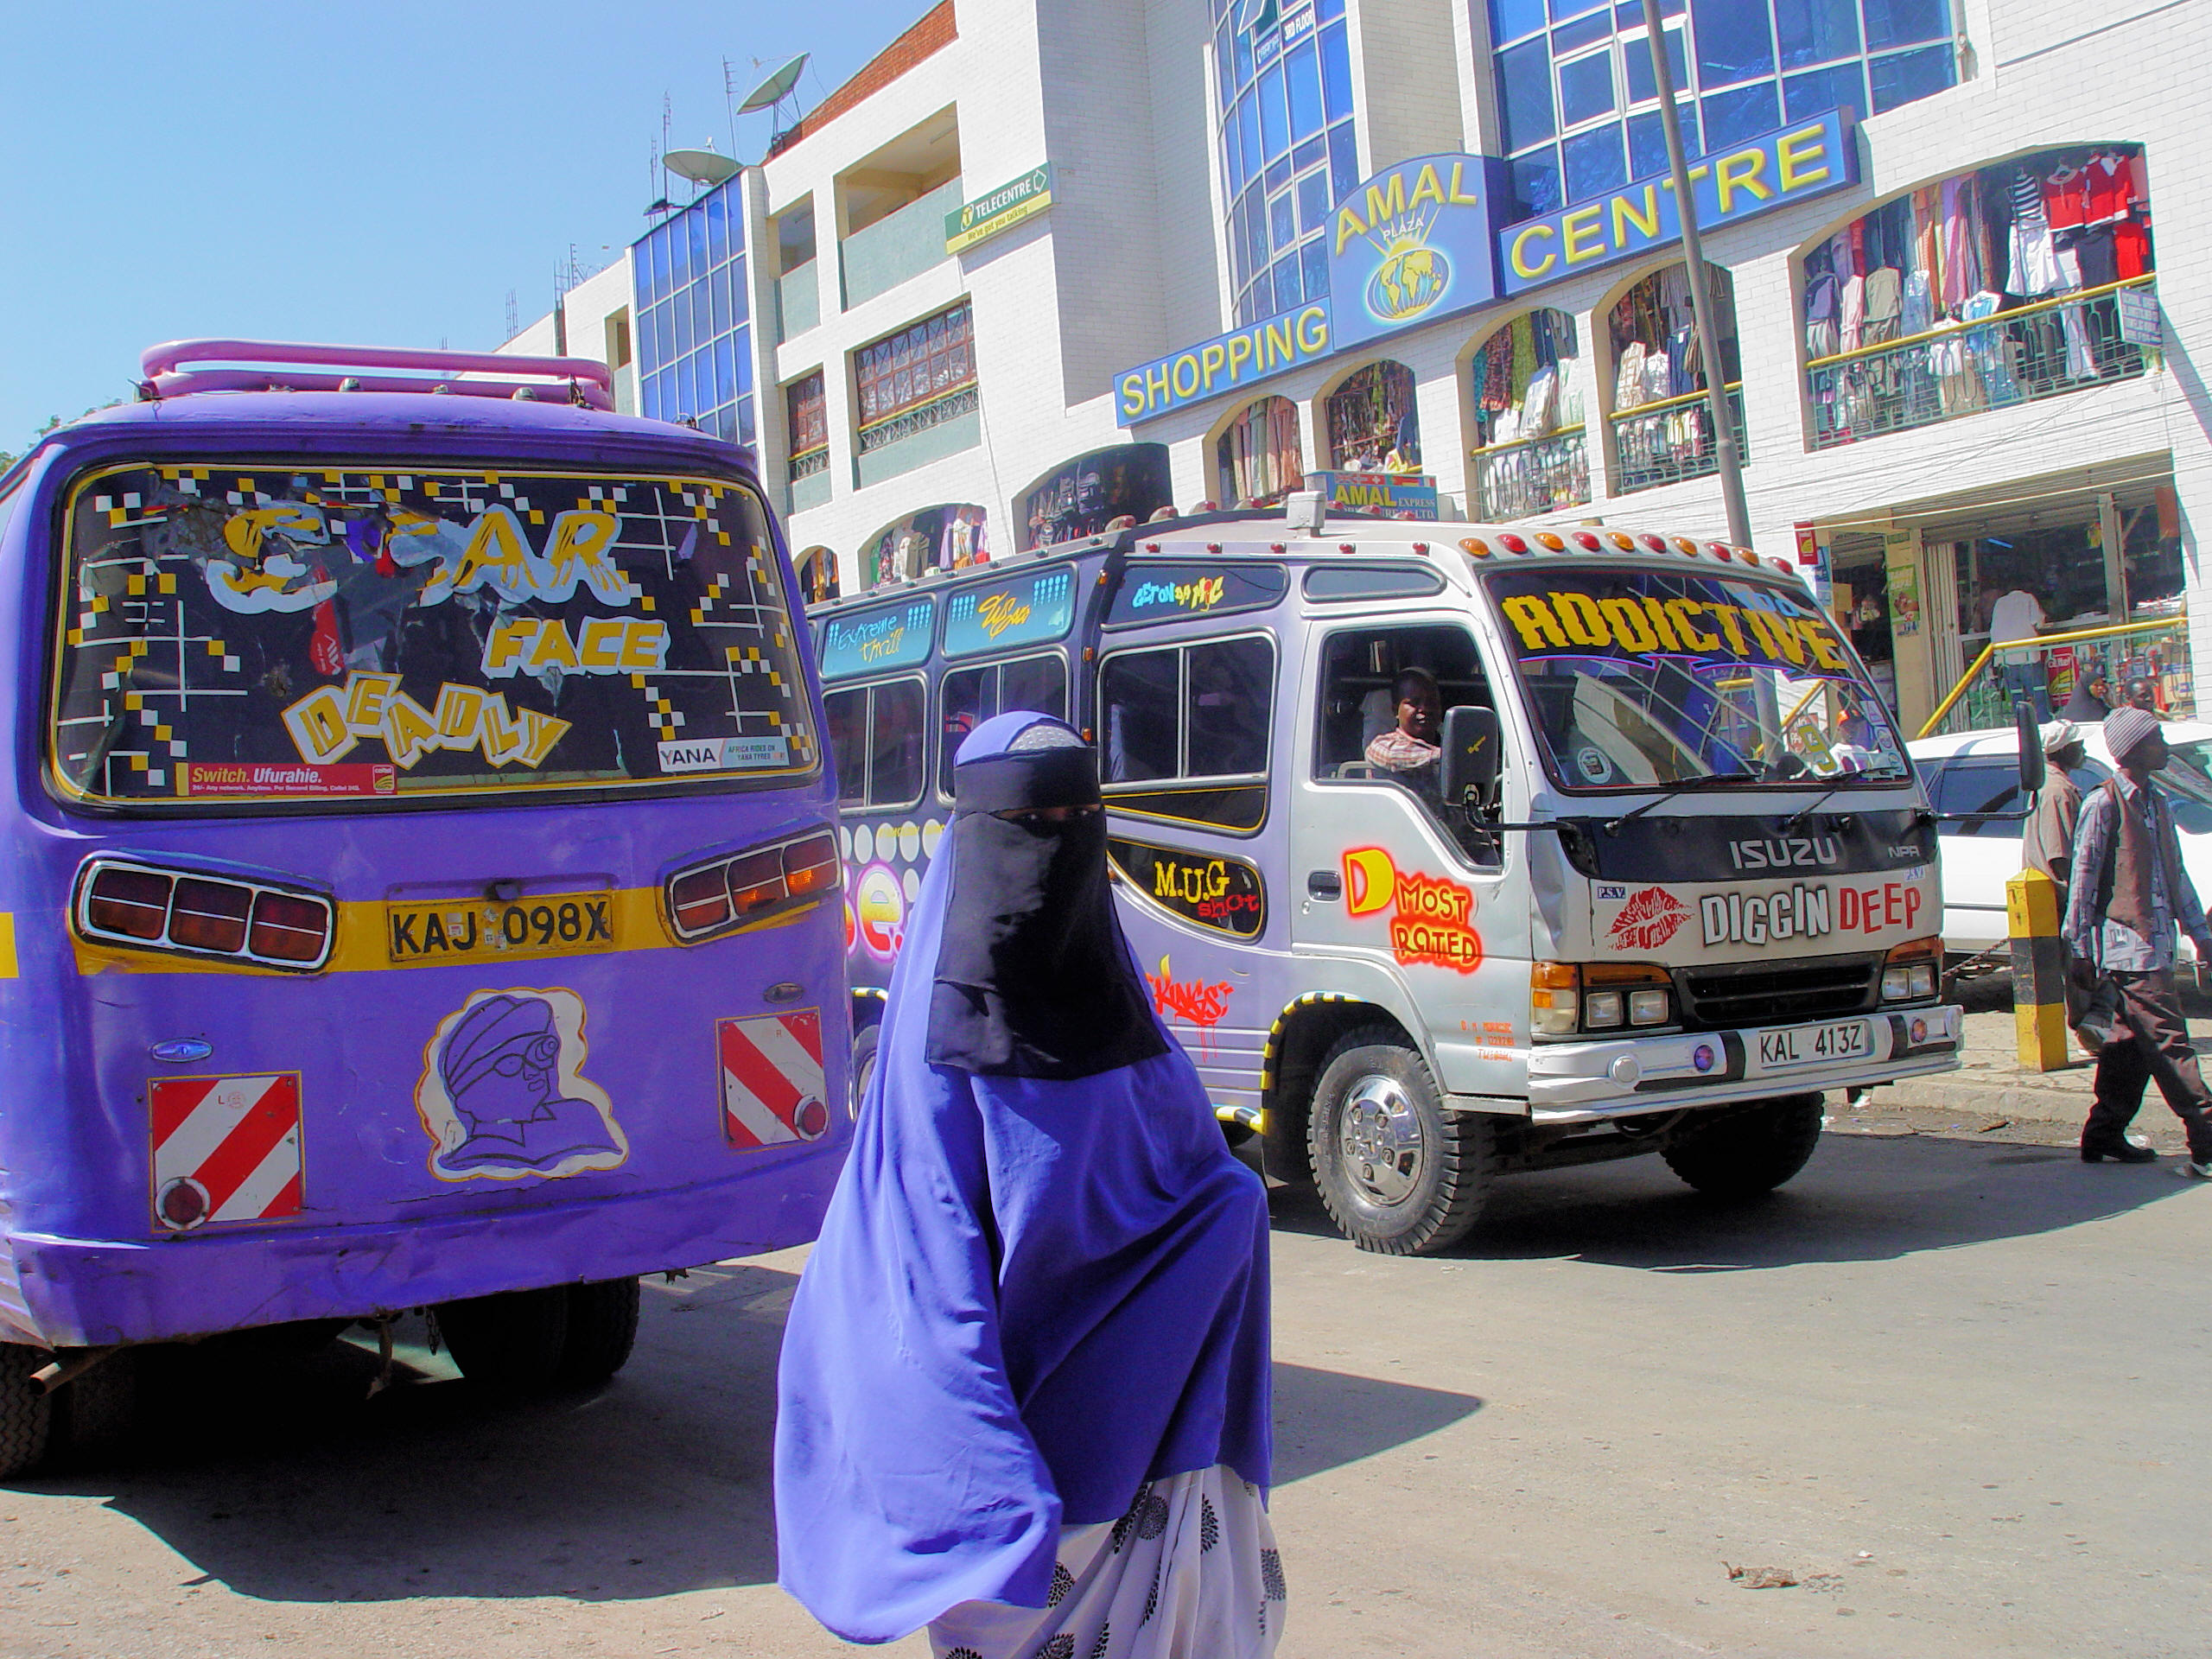 Nairobi Street and Matatus (transport vans)